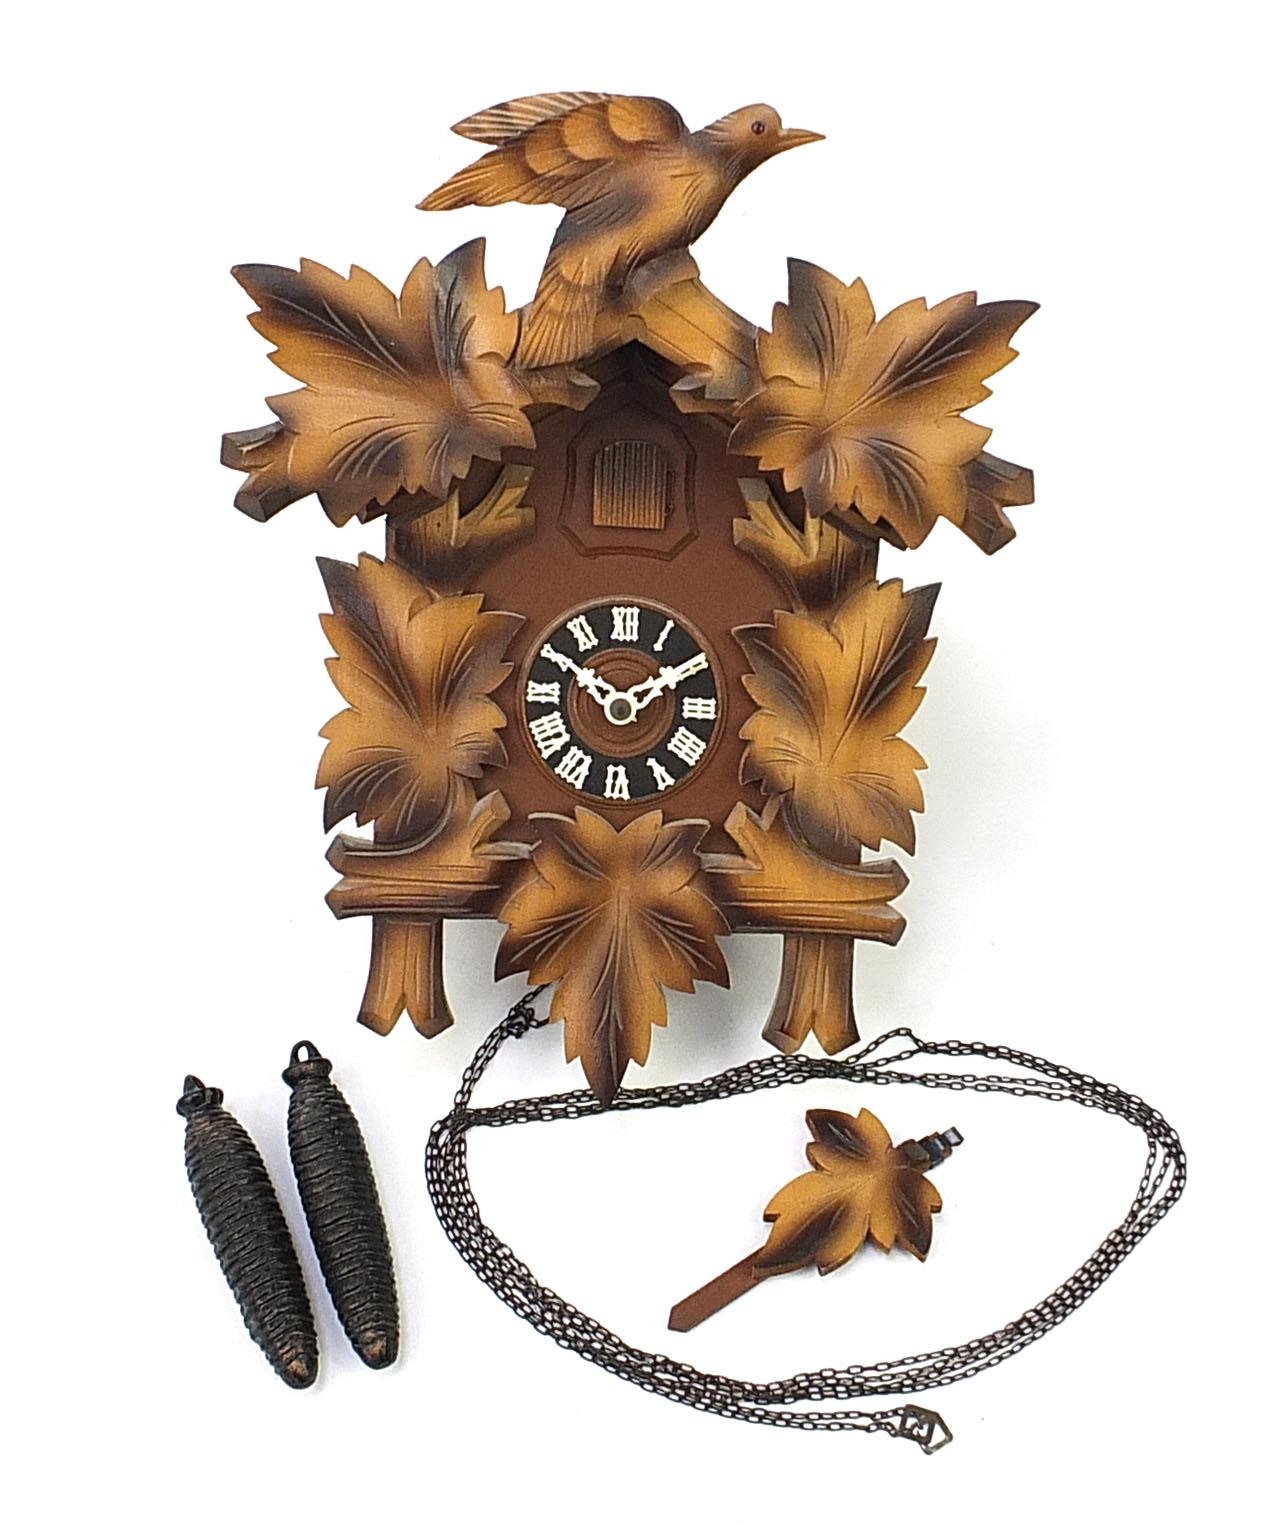 Carved Black Forest cuckoo clock, 38cm high